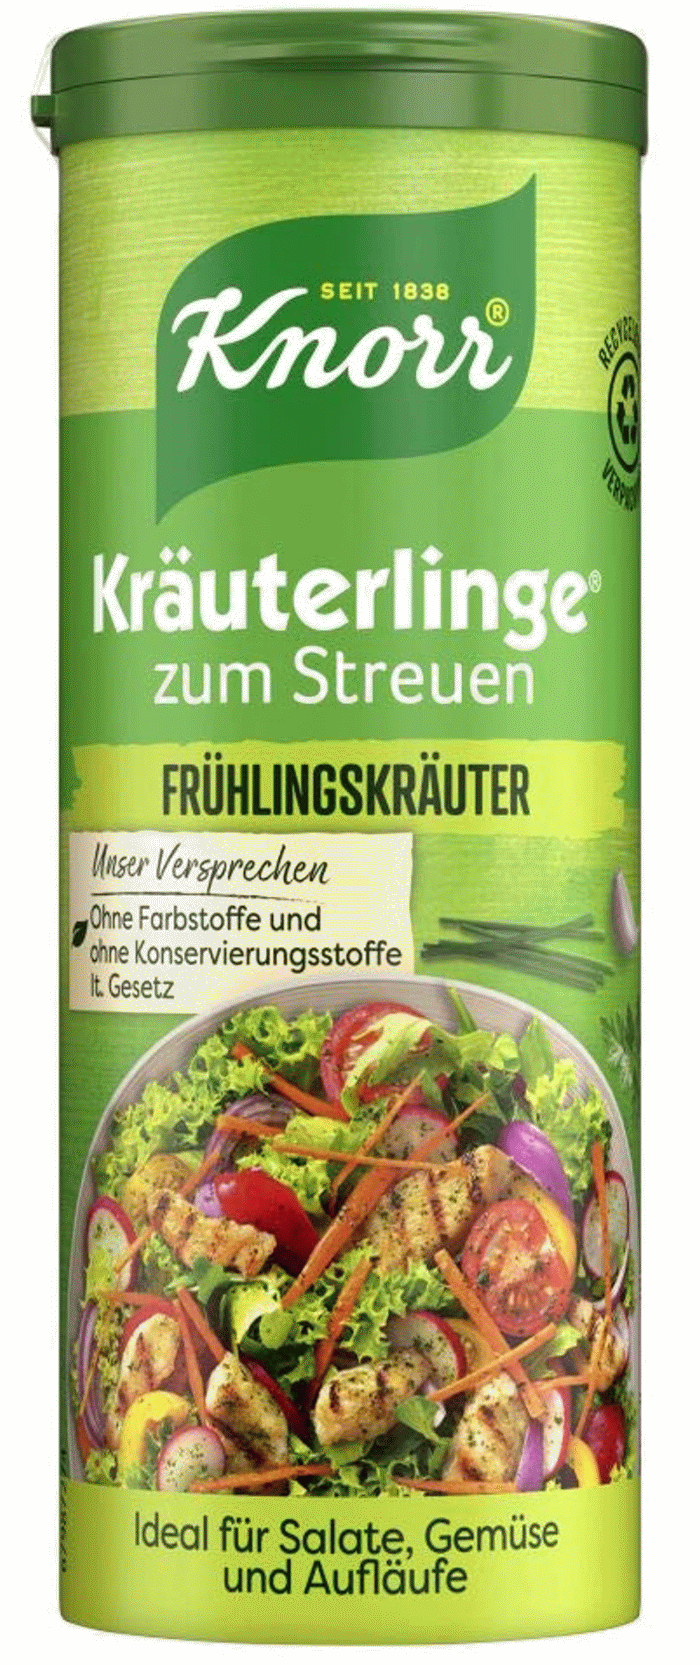 Knorr Kräuterlinge Frühlingskräuter 60g / 2.1oz